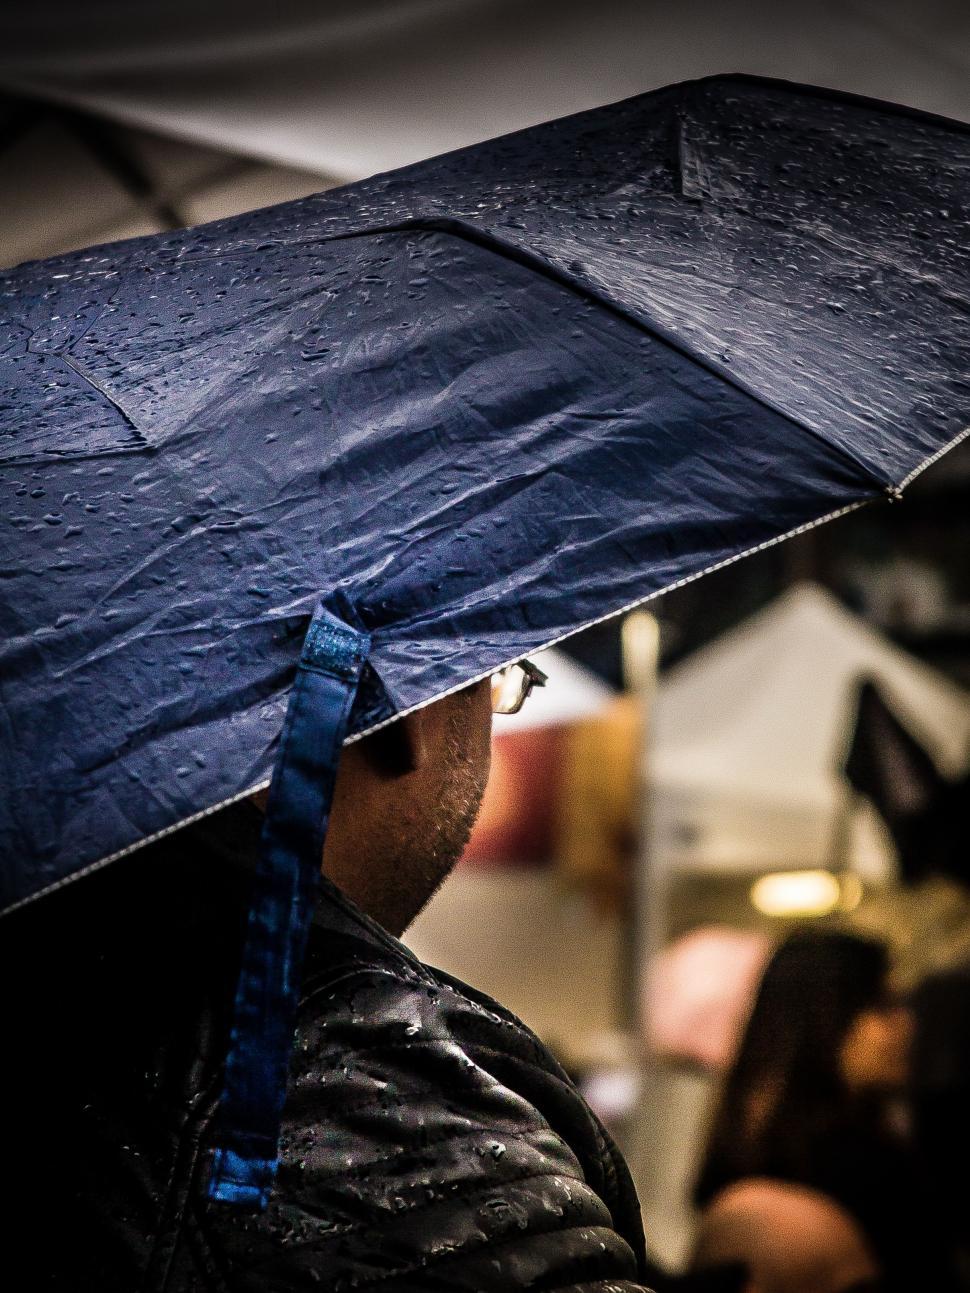 Free Image of Man Holding Umbrella in the Rain 